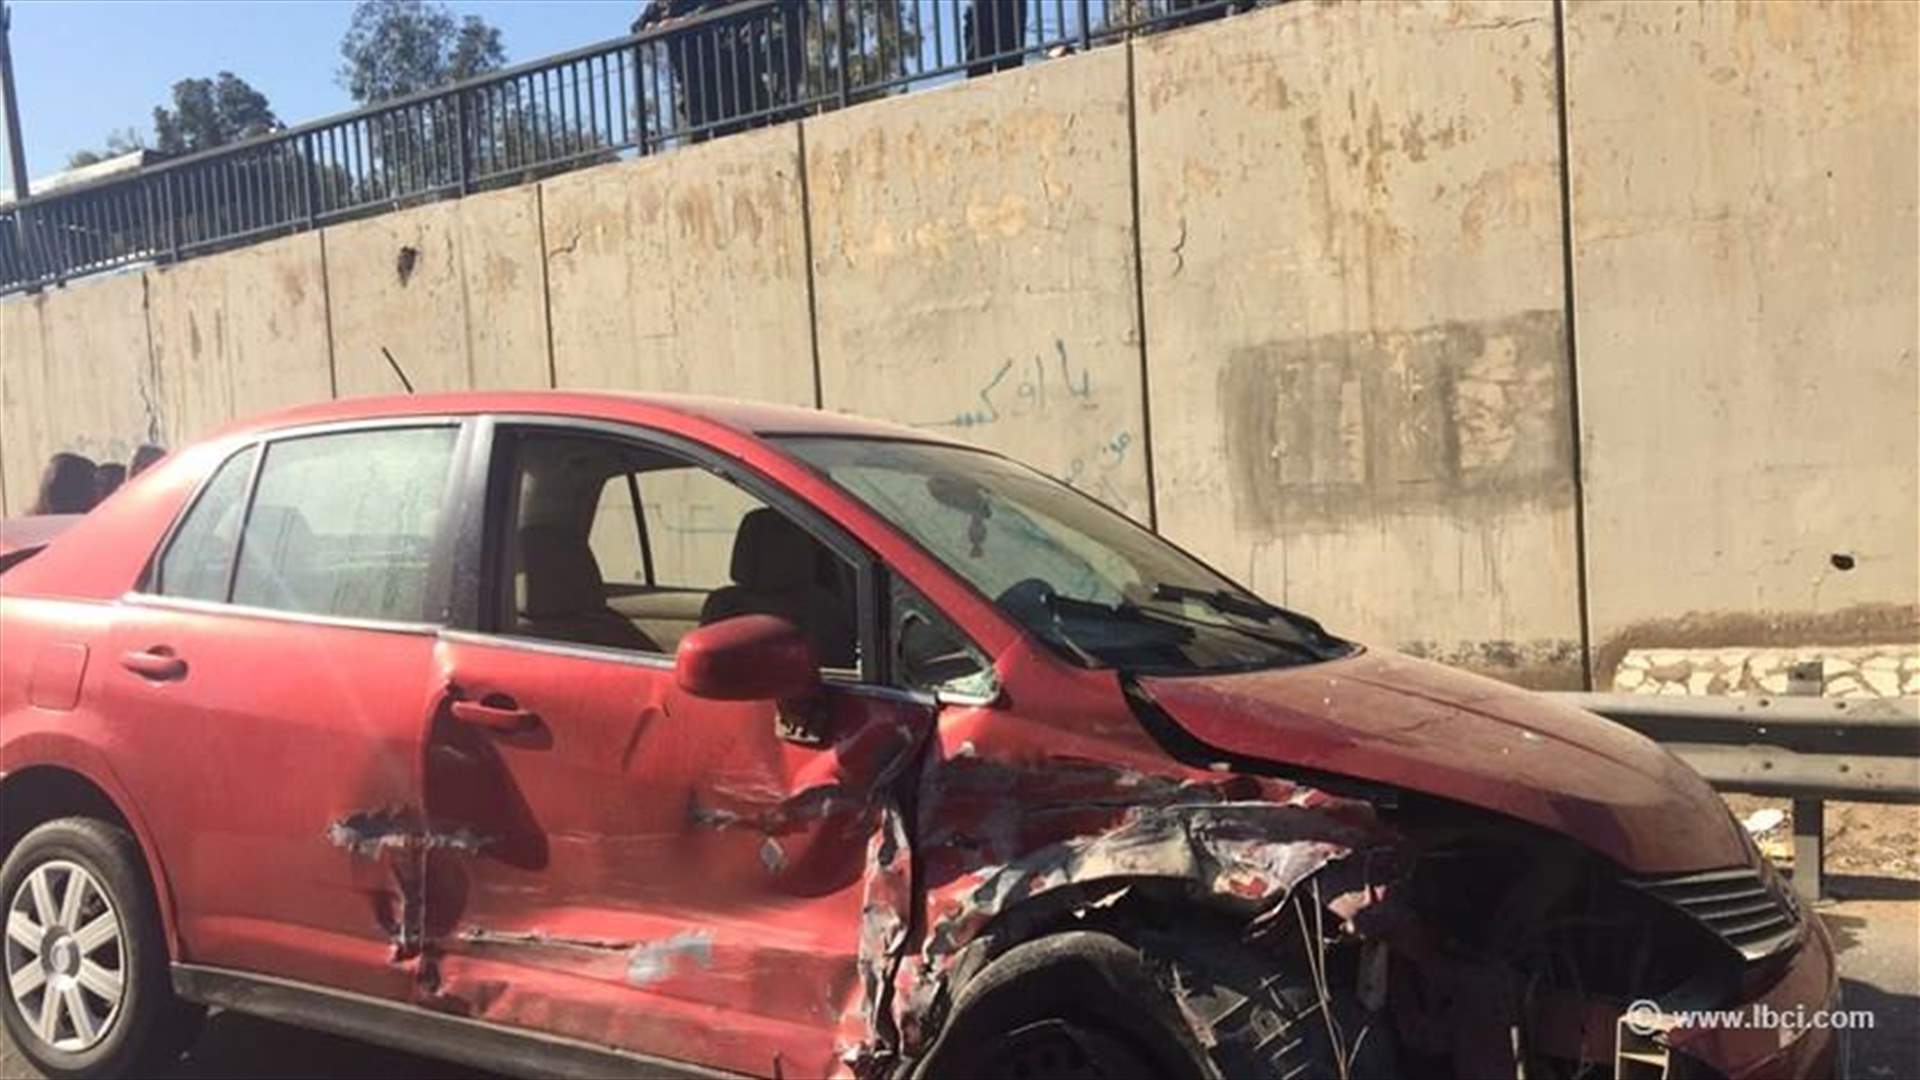 بالصور - حادث بين 4 سيارات على اوتوستراد المطار باتجاه بيروت